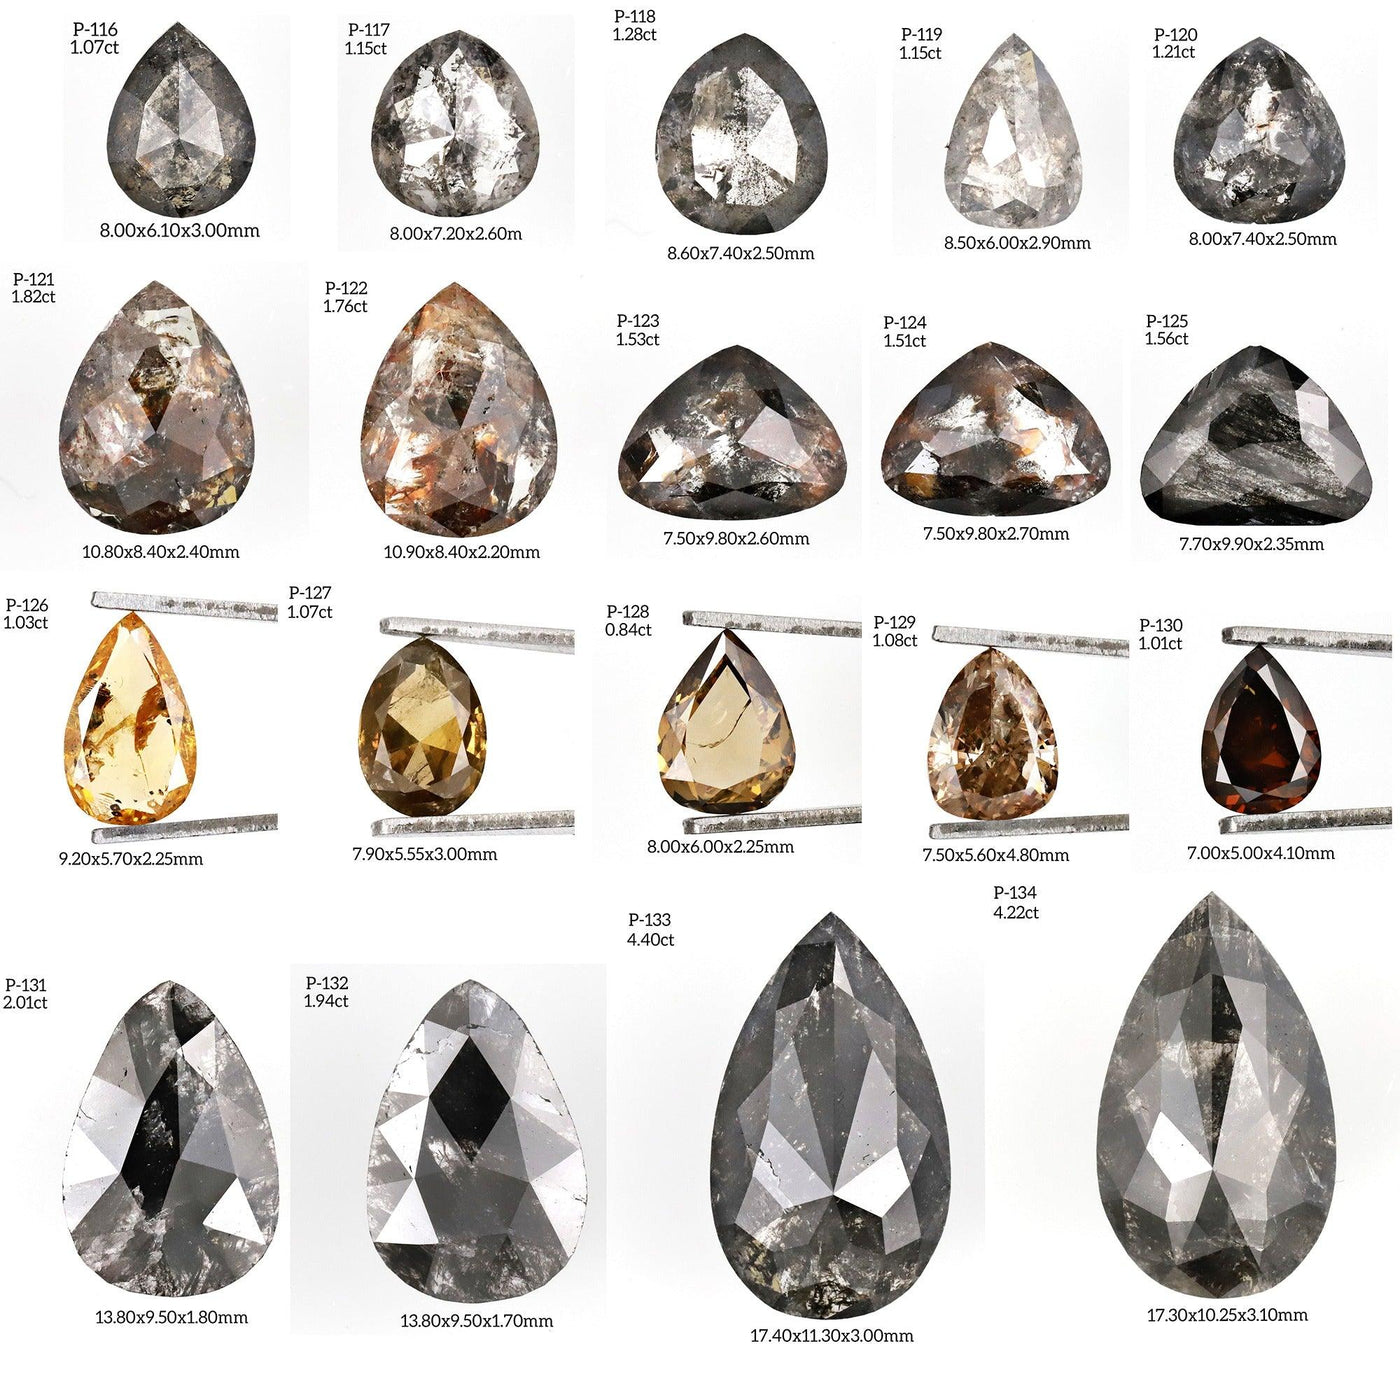 Pear Diamond Ring | Salt and pepper Ring | Pear Salt and pepper Ring | Salt and pepper Diamond - Rubysta